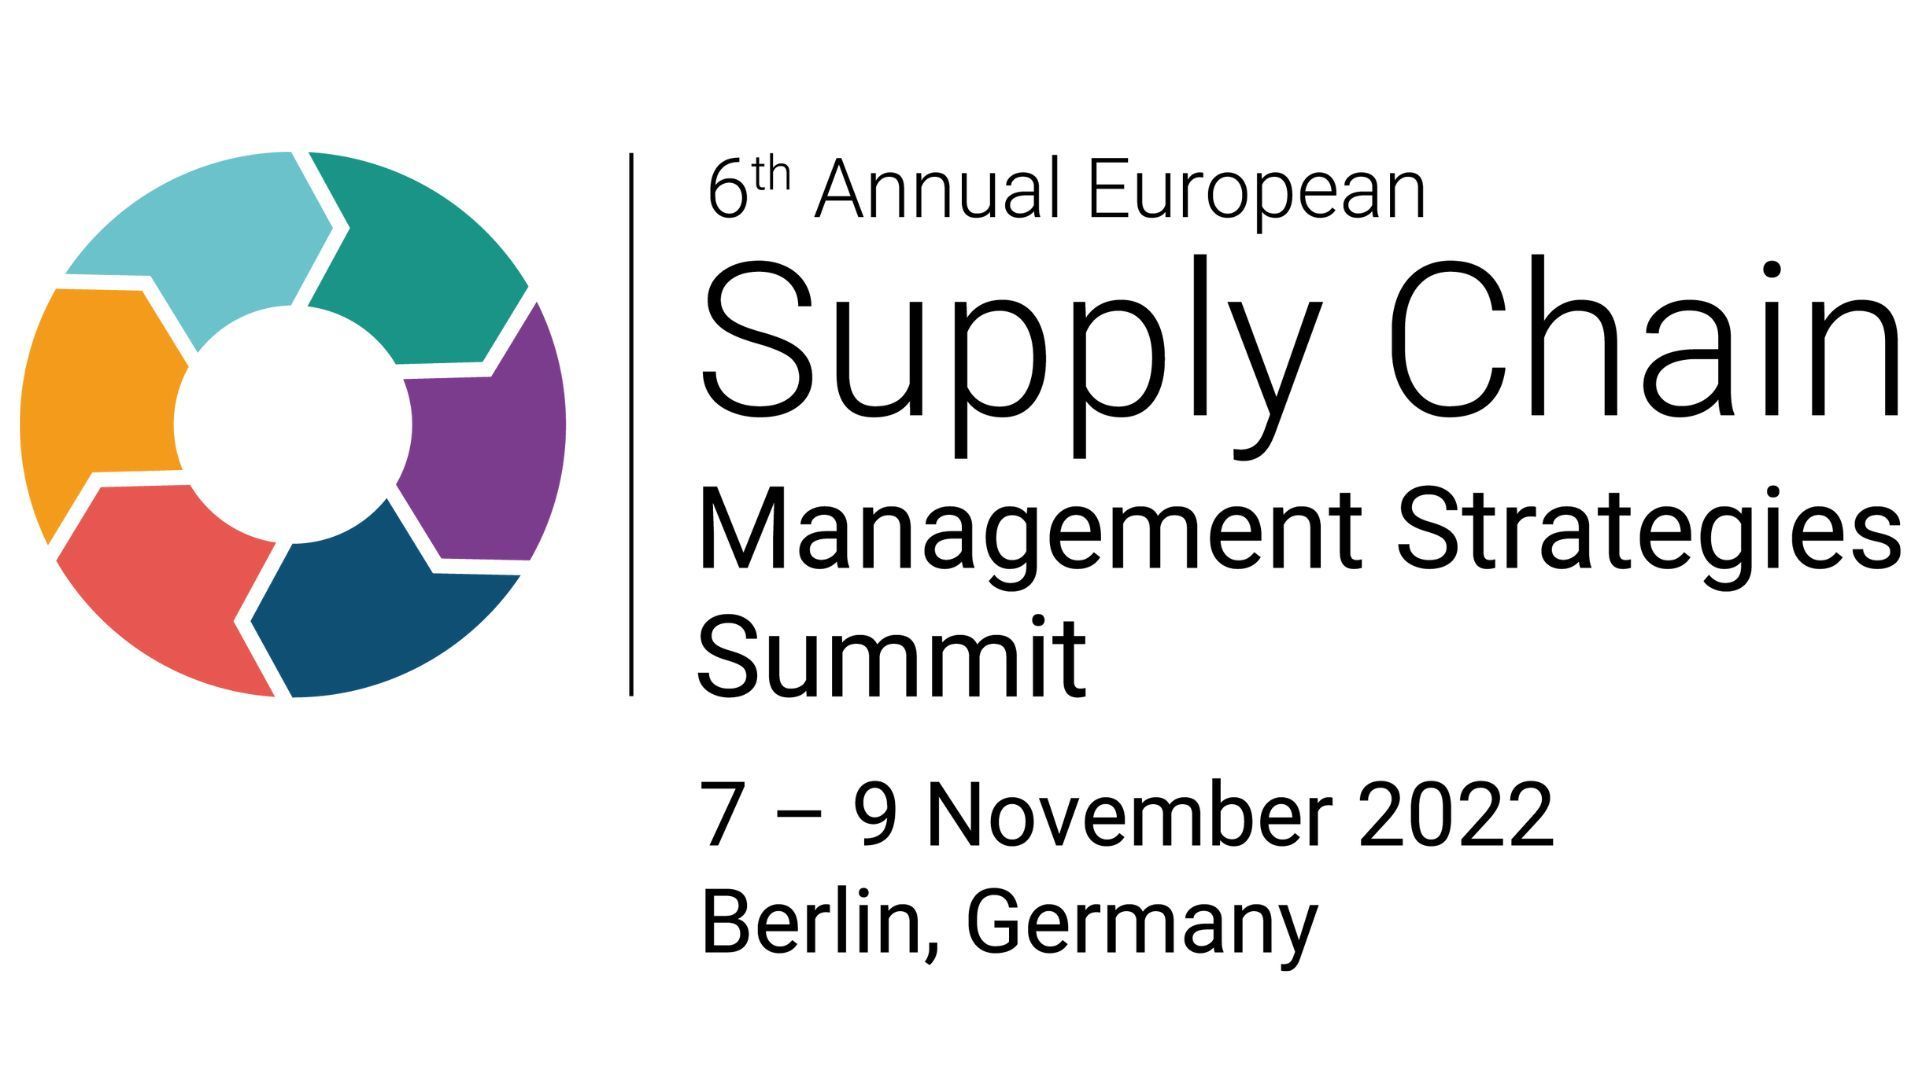 European Supply Chain Management Strategies Summit 2022, Berlin, Germany